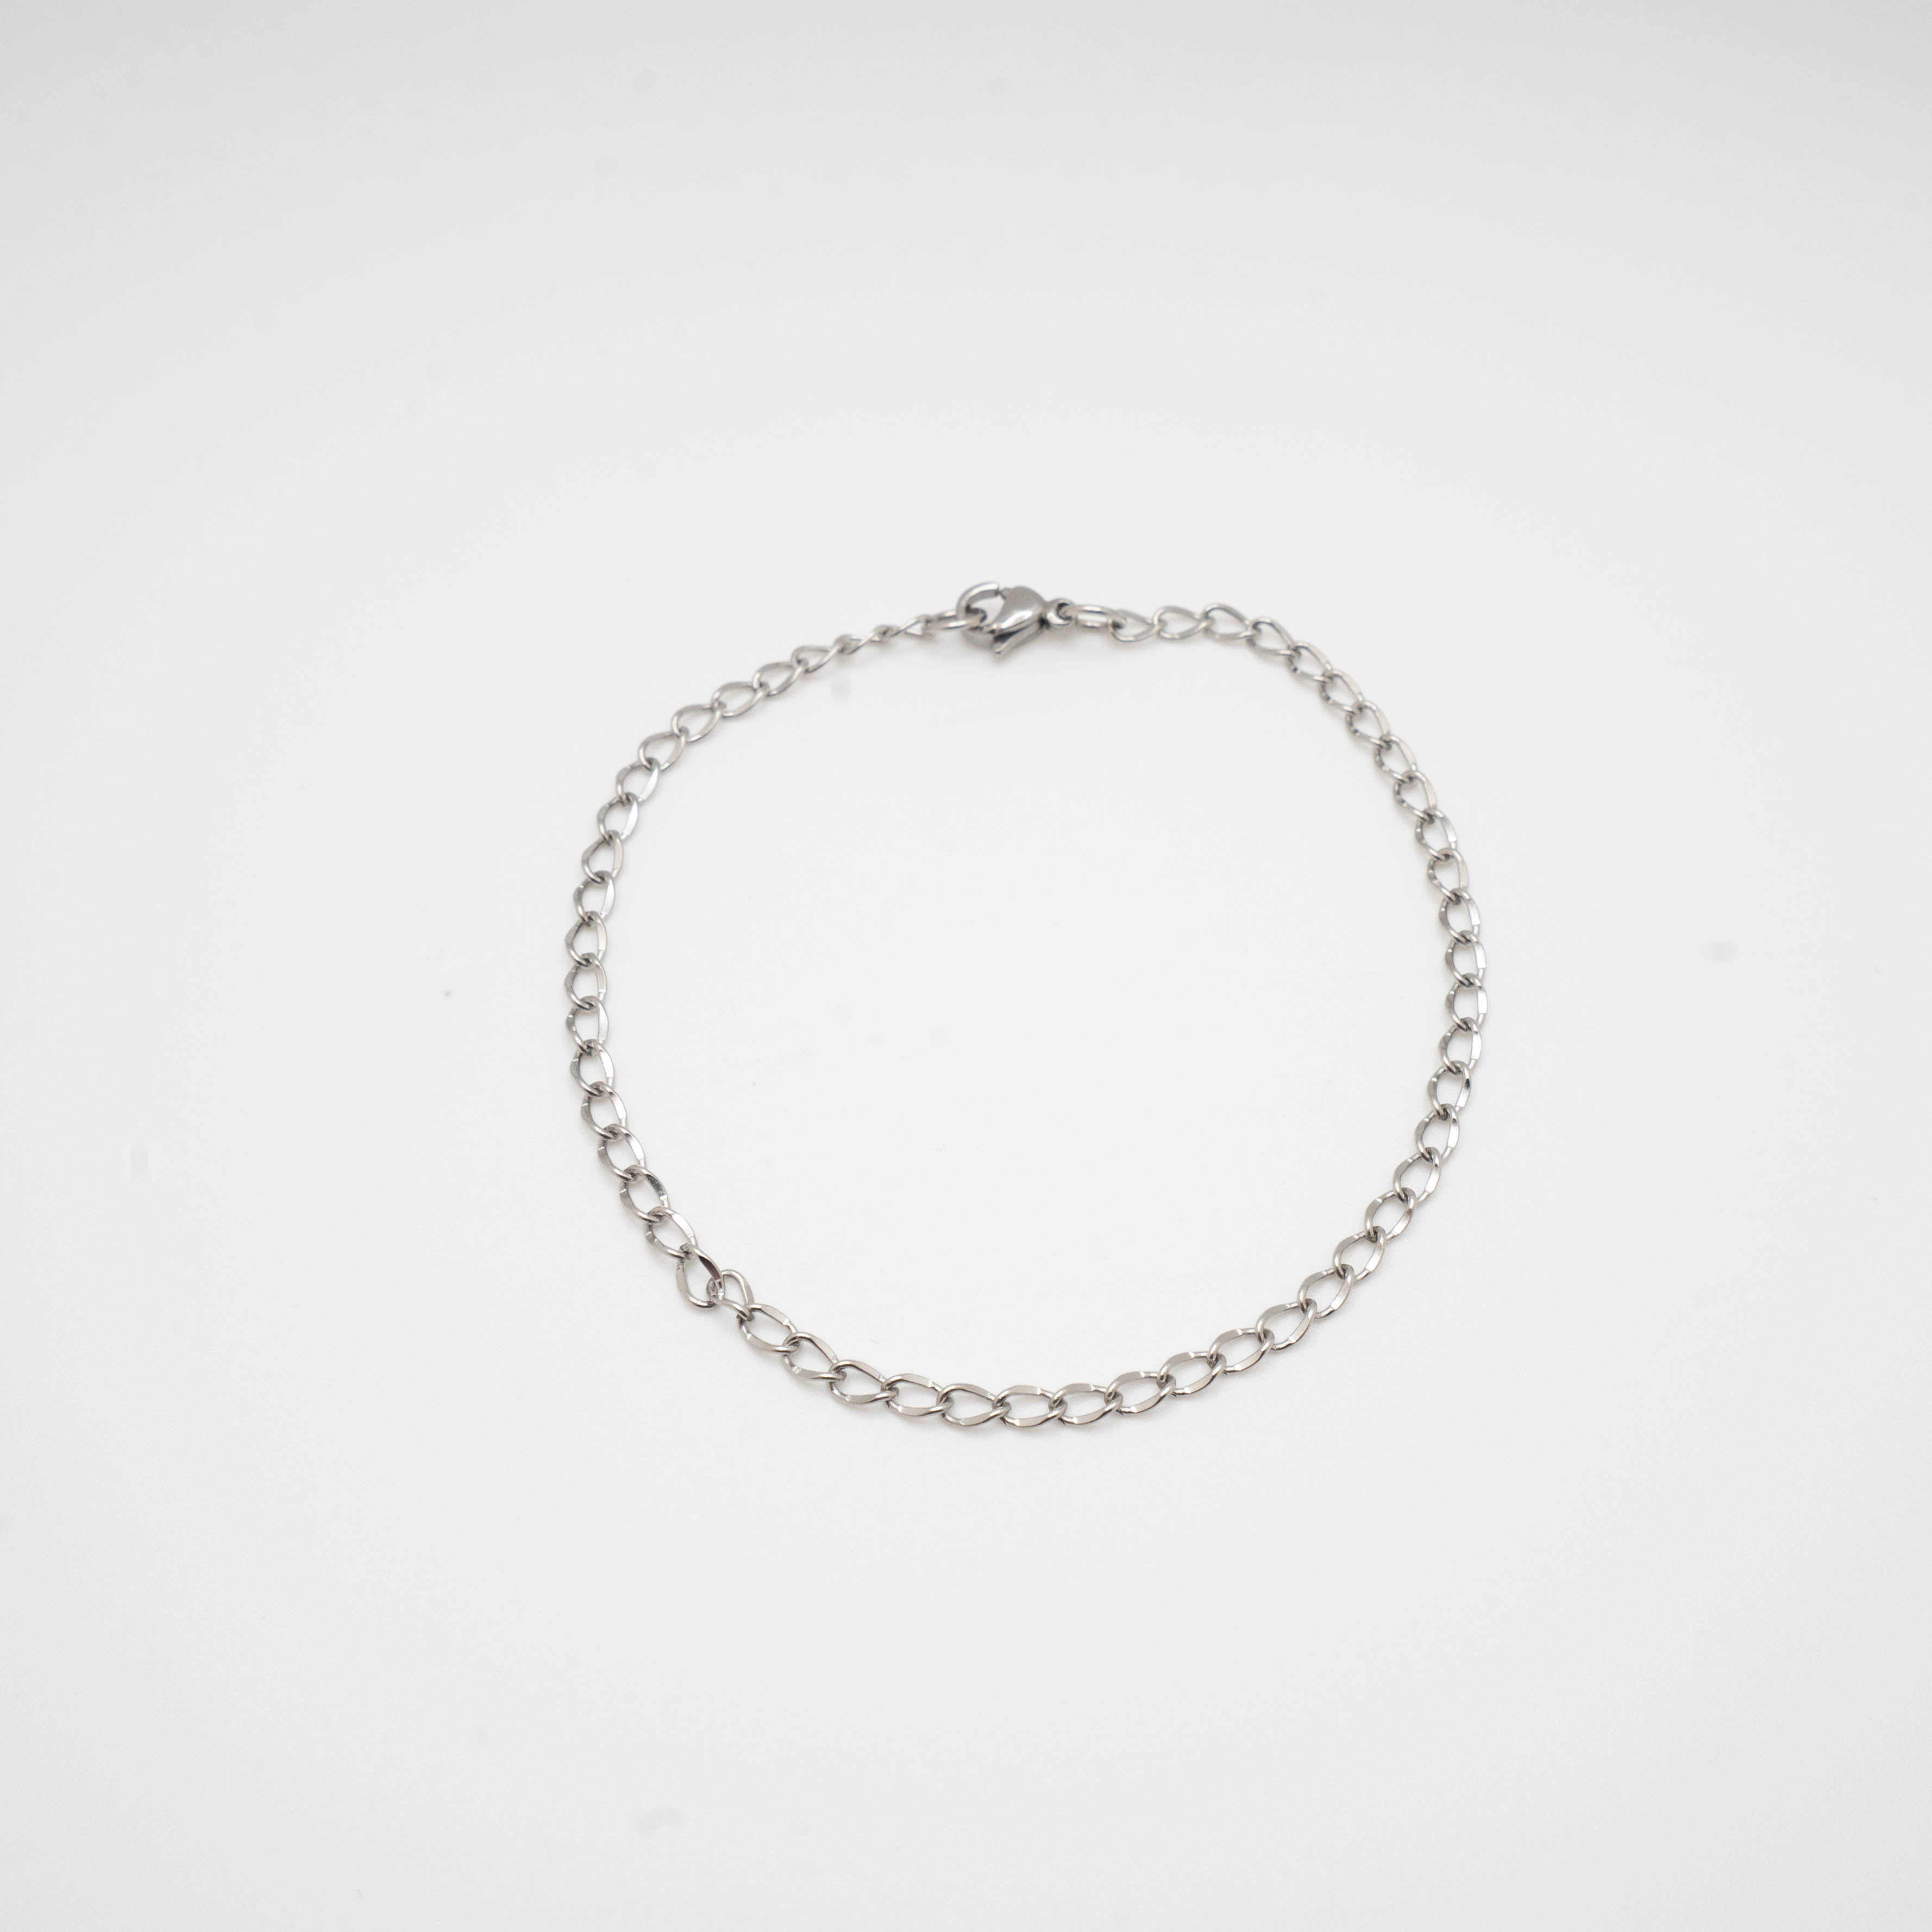 Silver Dainty Curb Chain Bracelet